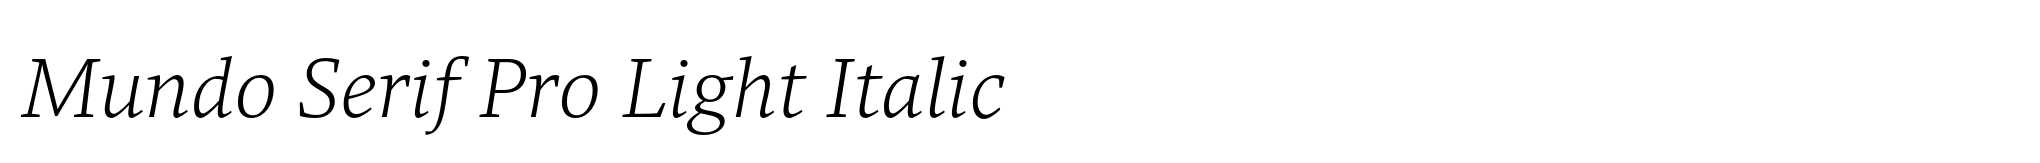 Mundo Serif Pro Light Italic image